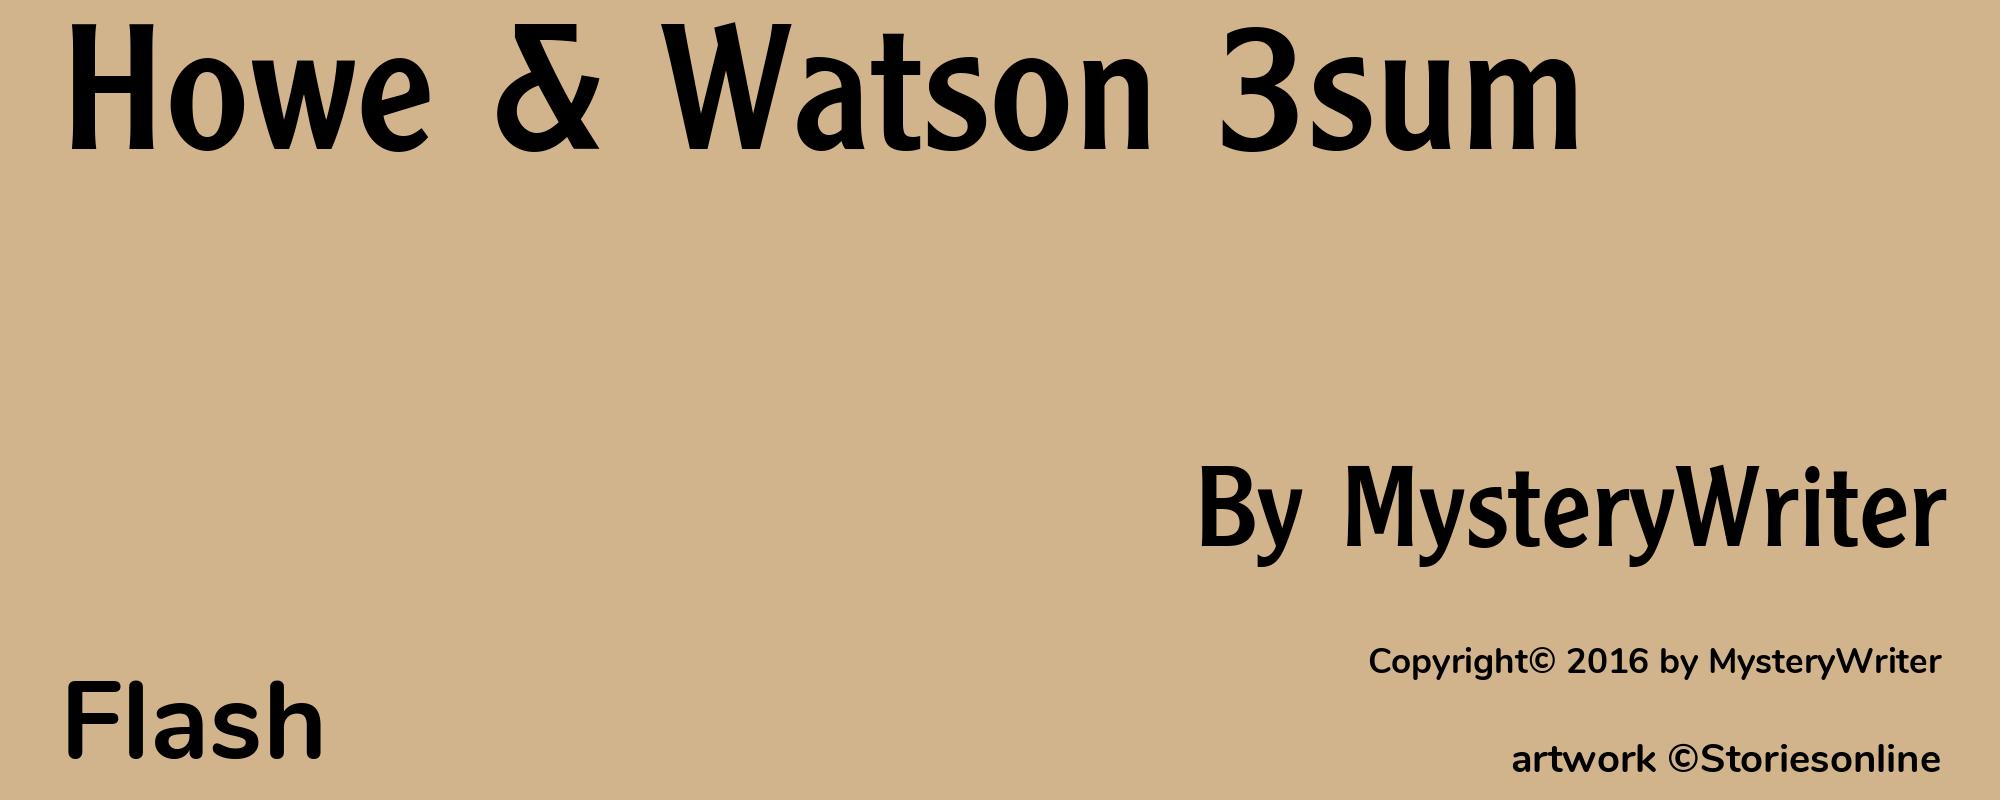 Howe & Watson 3sum - Cover